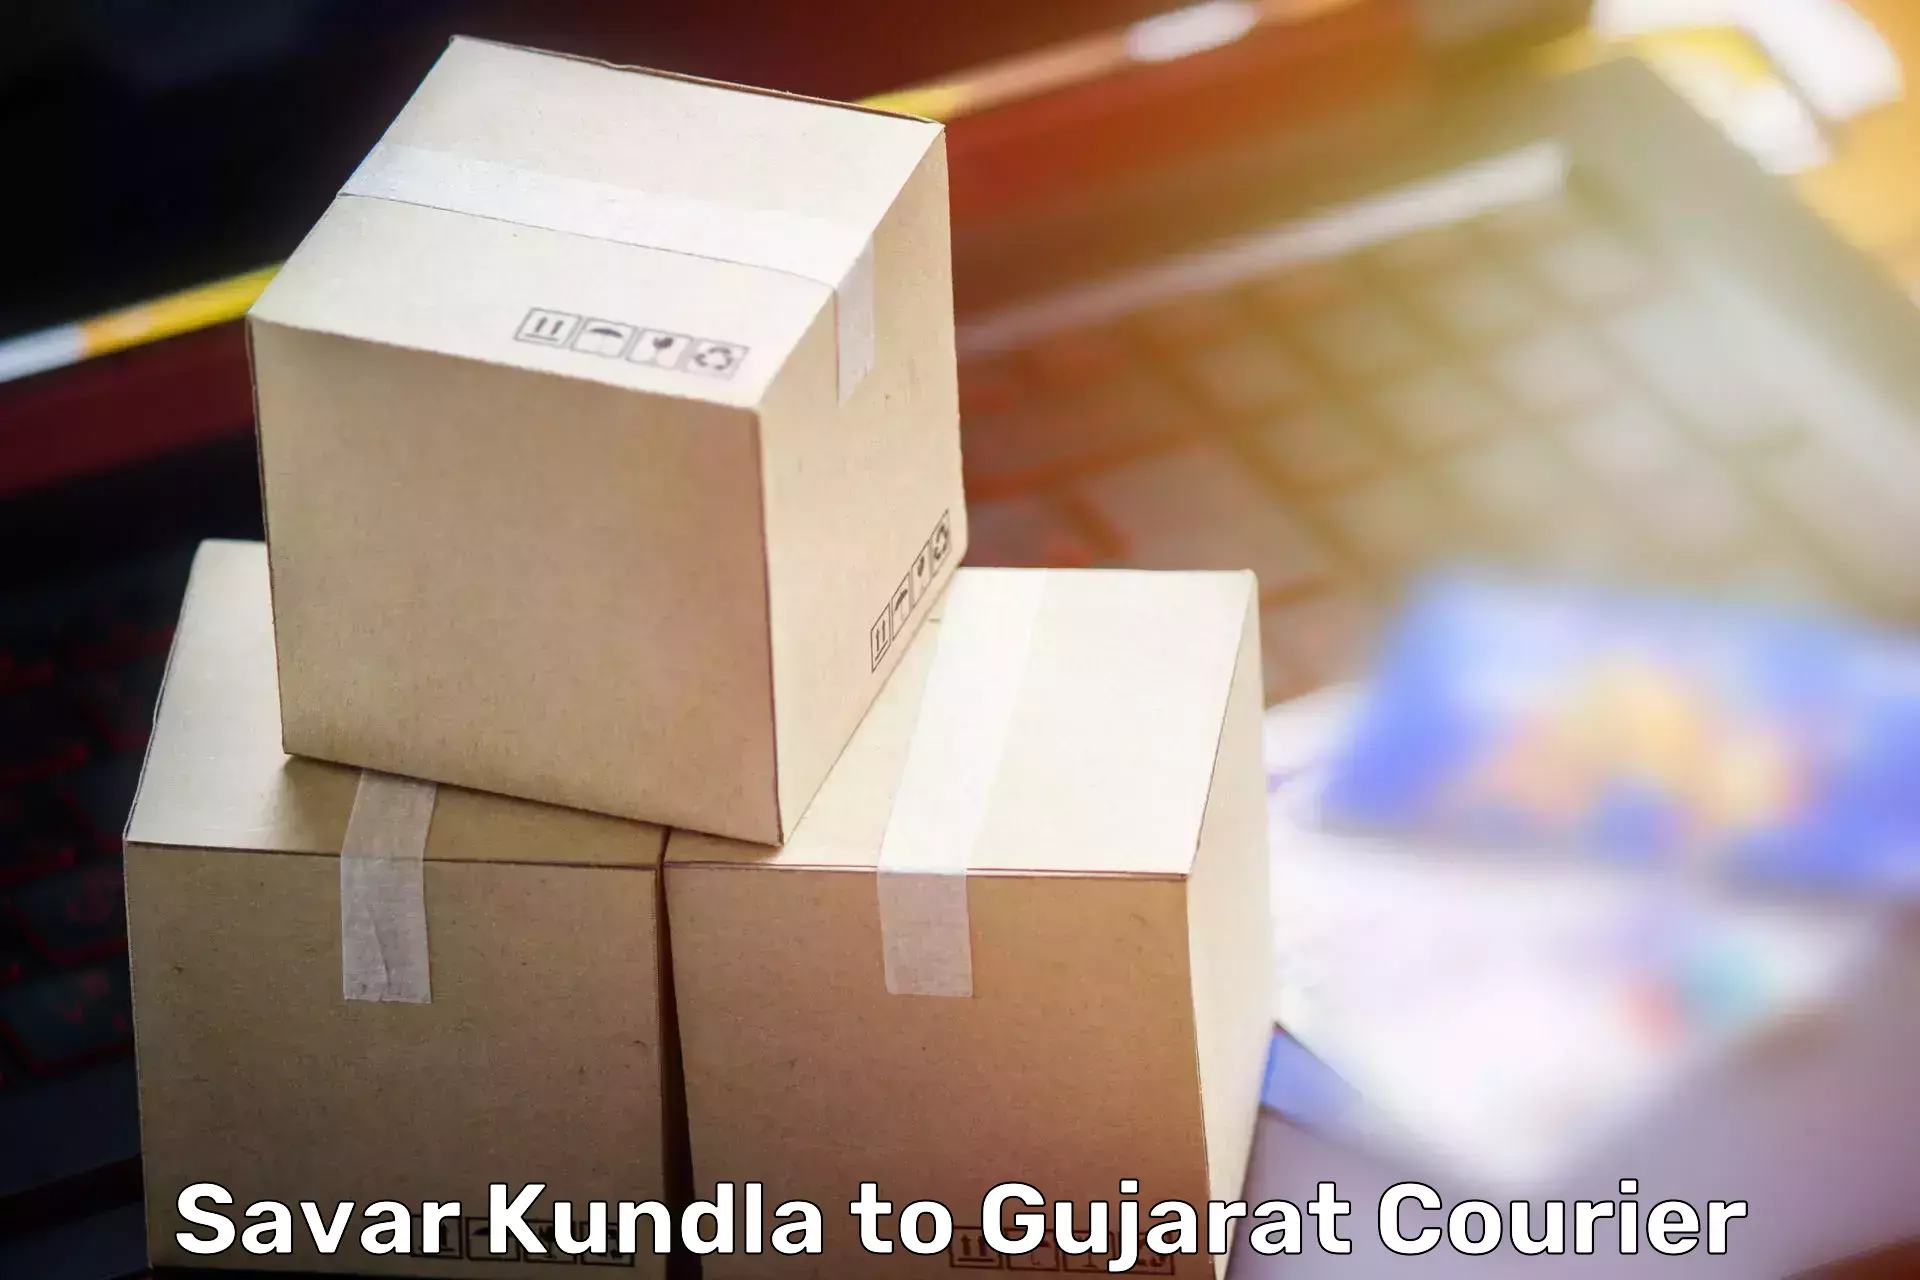 Furniture delivery service Savar Kundla to Katodara